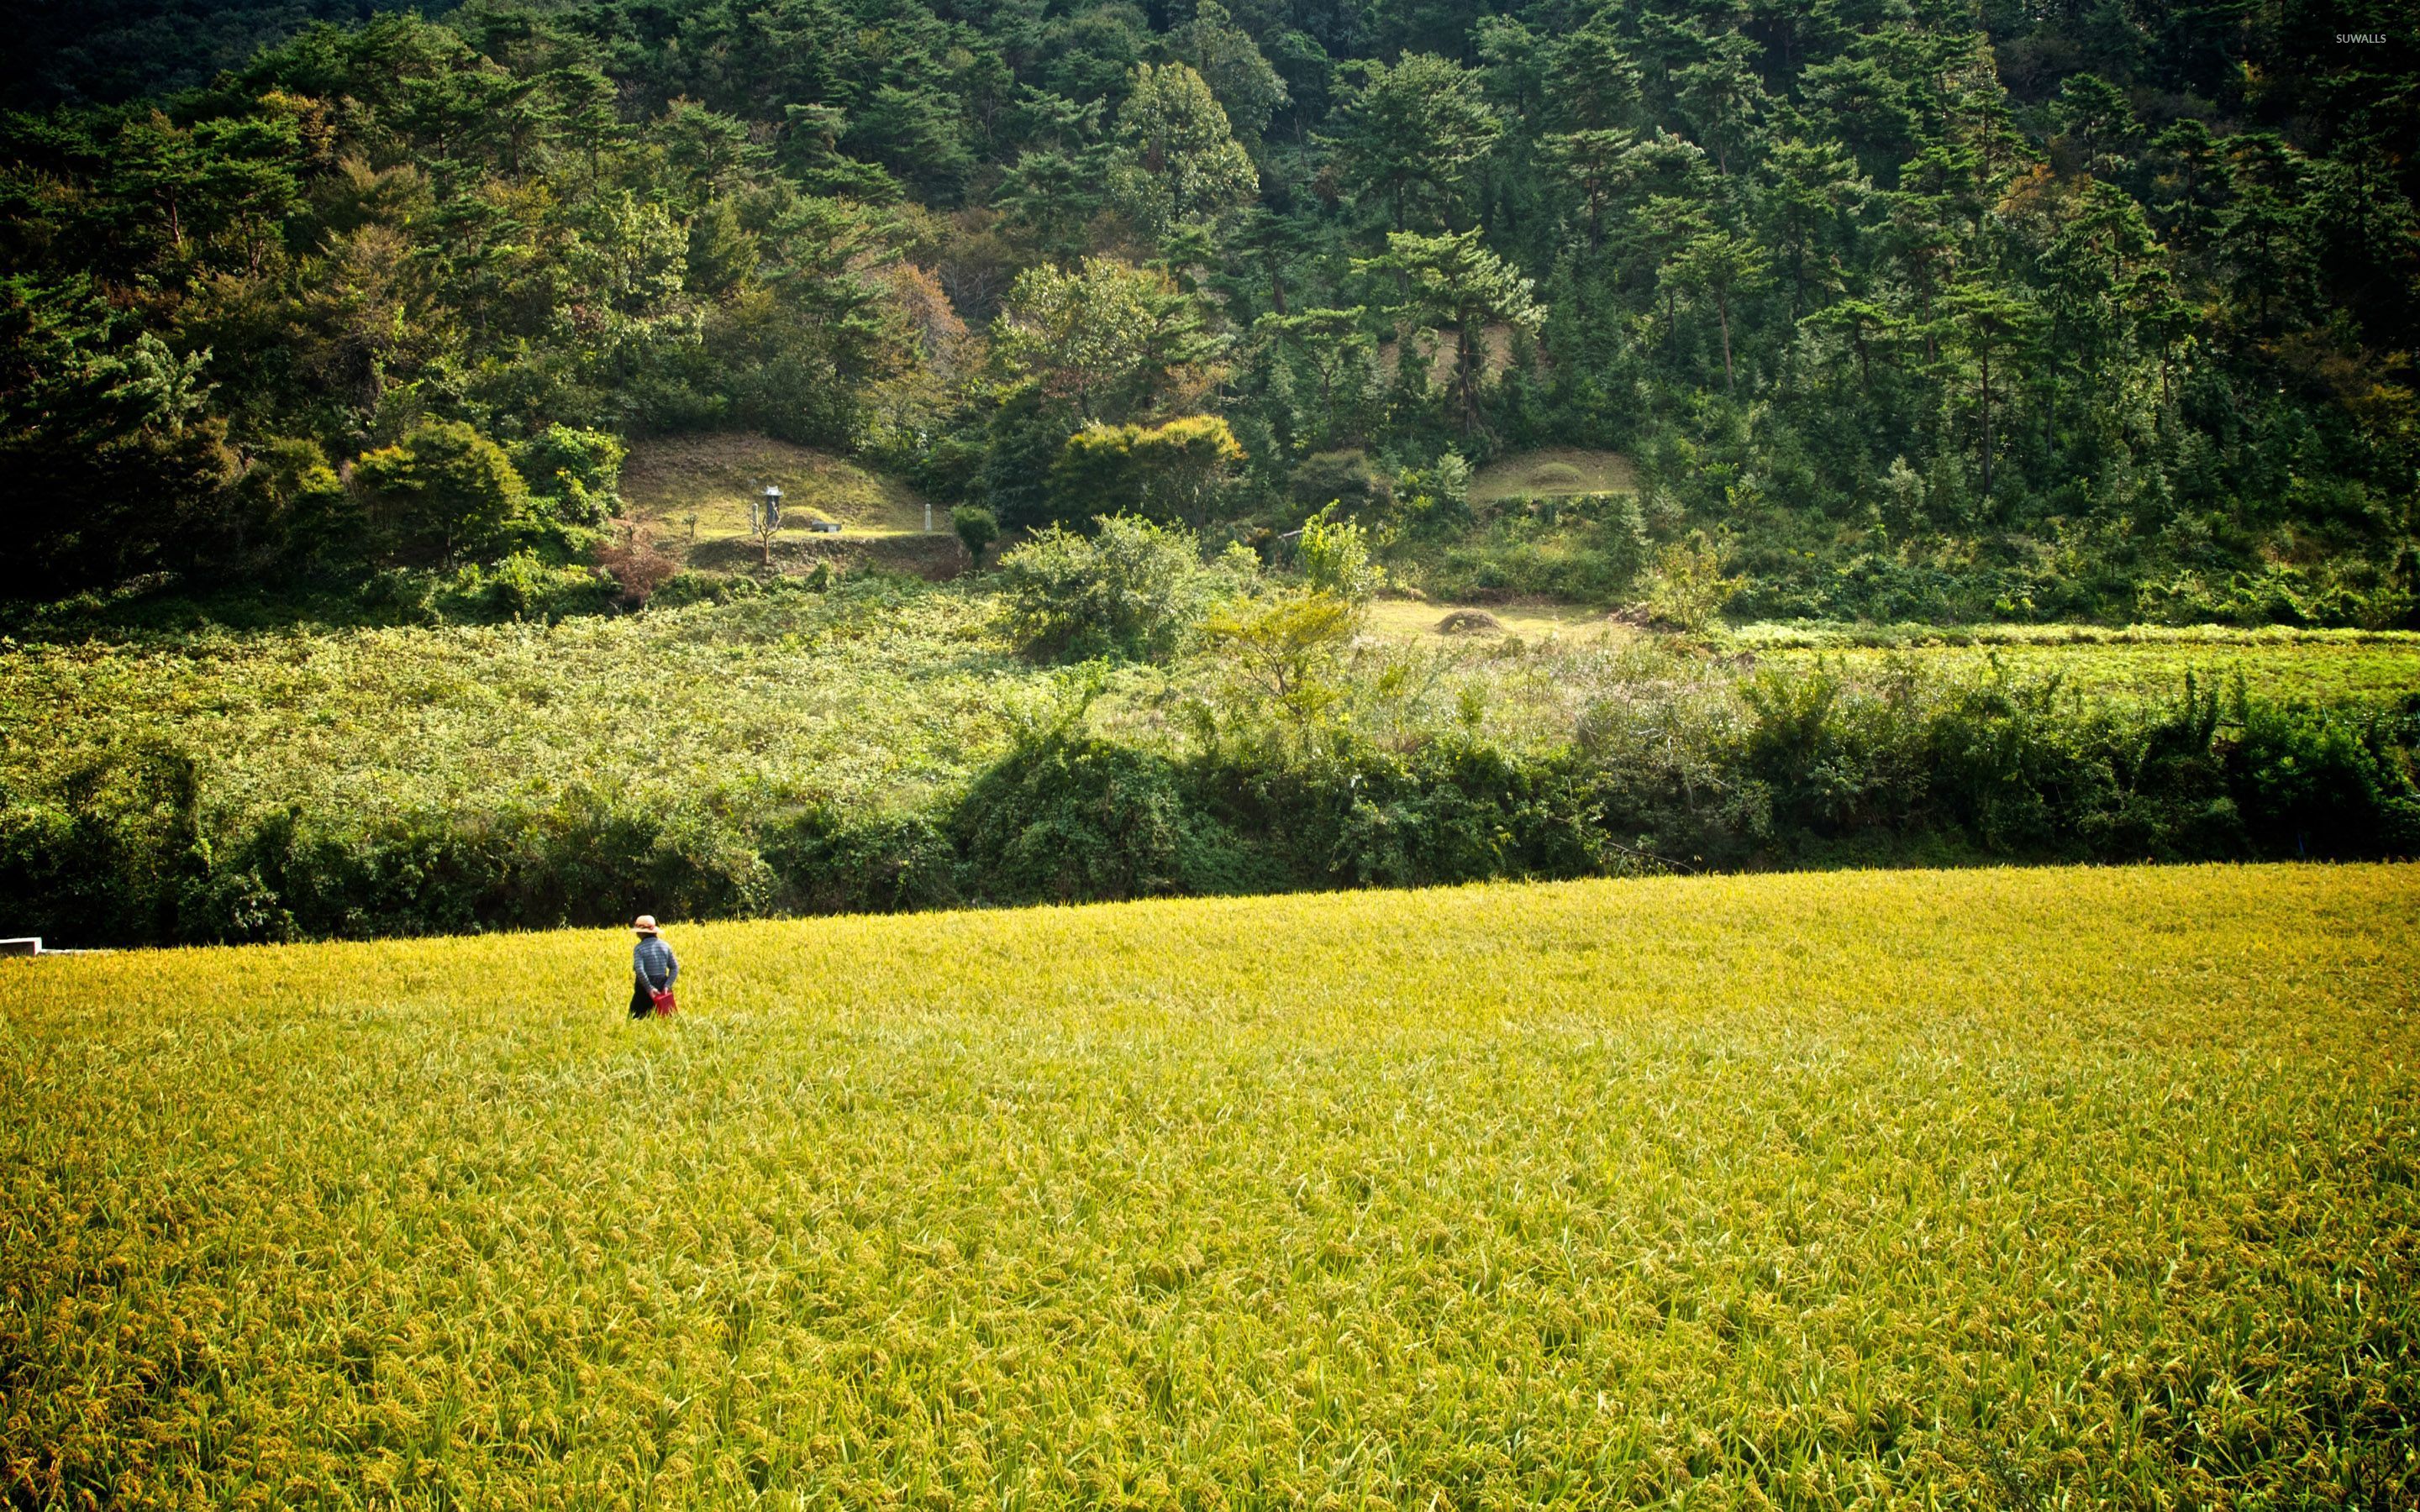 Korean Rice Field Wallpaper Nature Wallpapers 27747 Afalchi Free images wallpape [afalchi.blogspot.com]